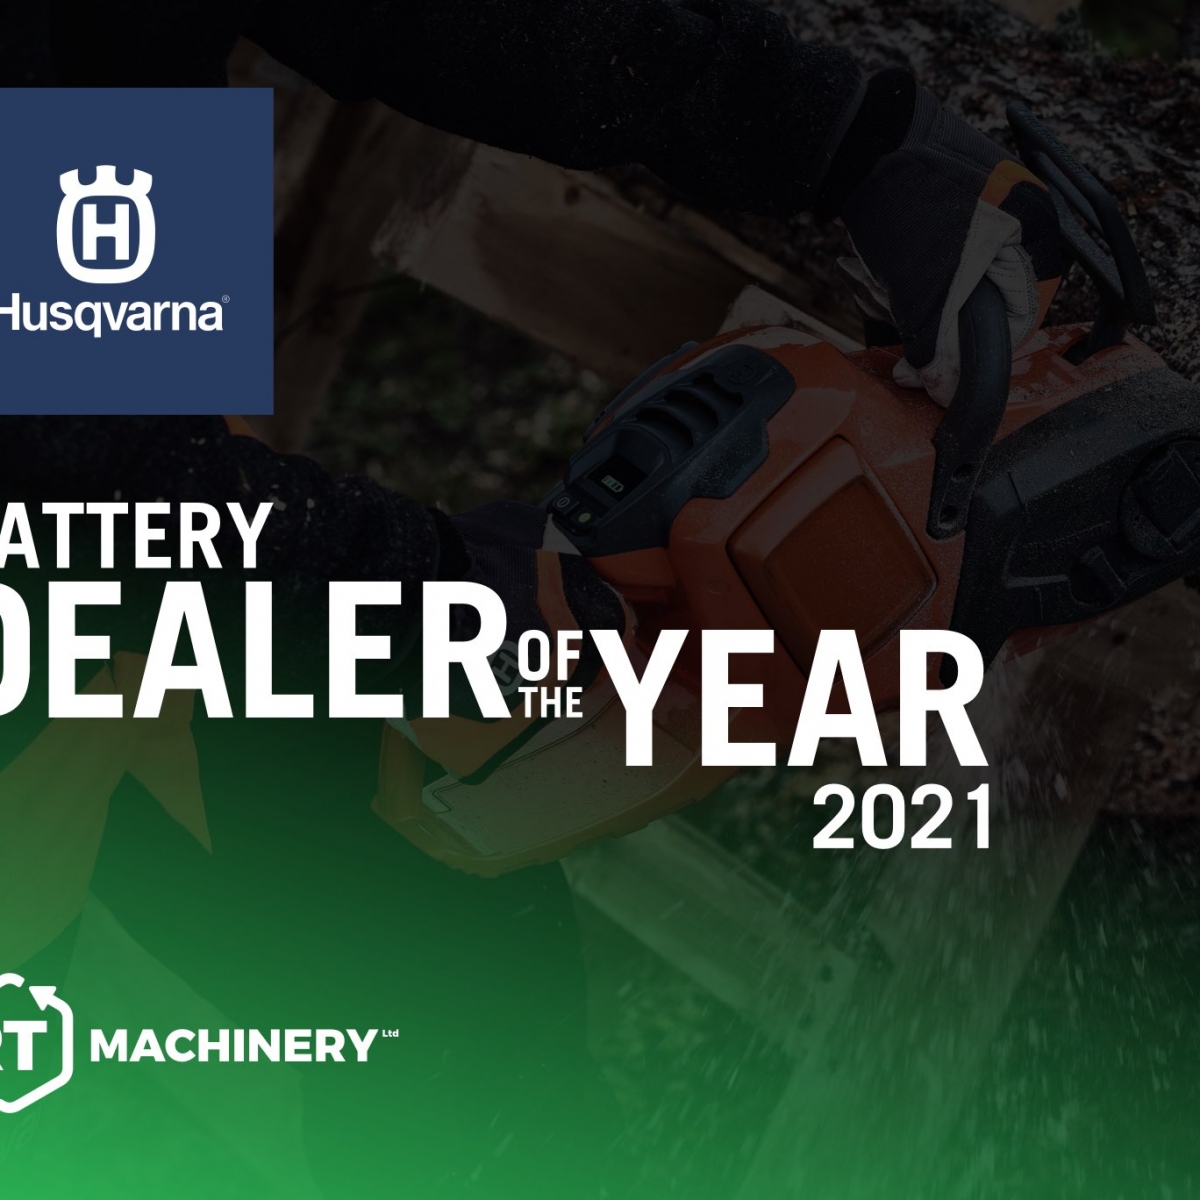 Husqvarna Battery Dealer of the Year 2021